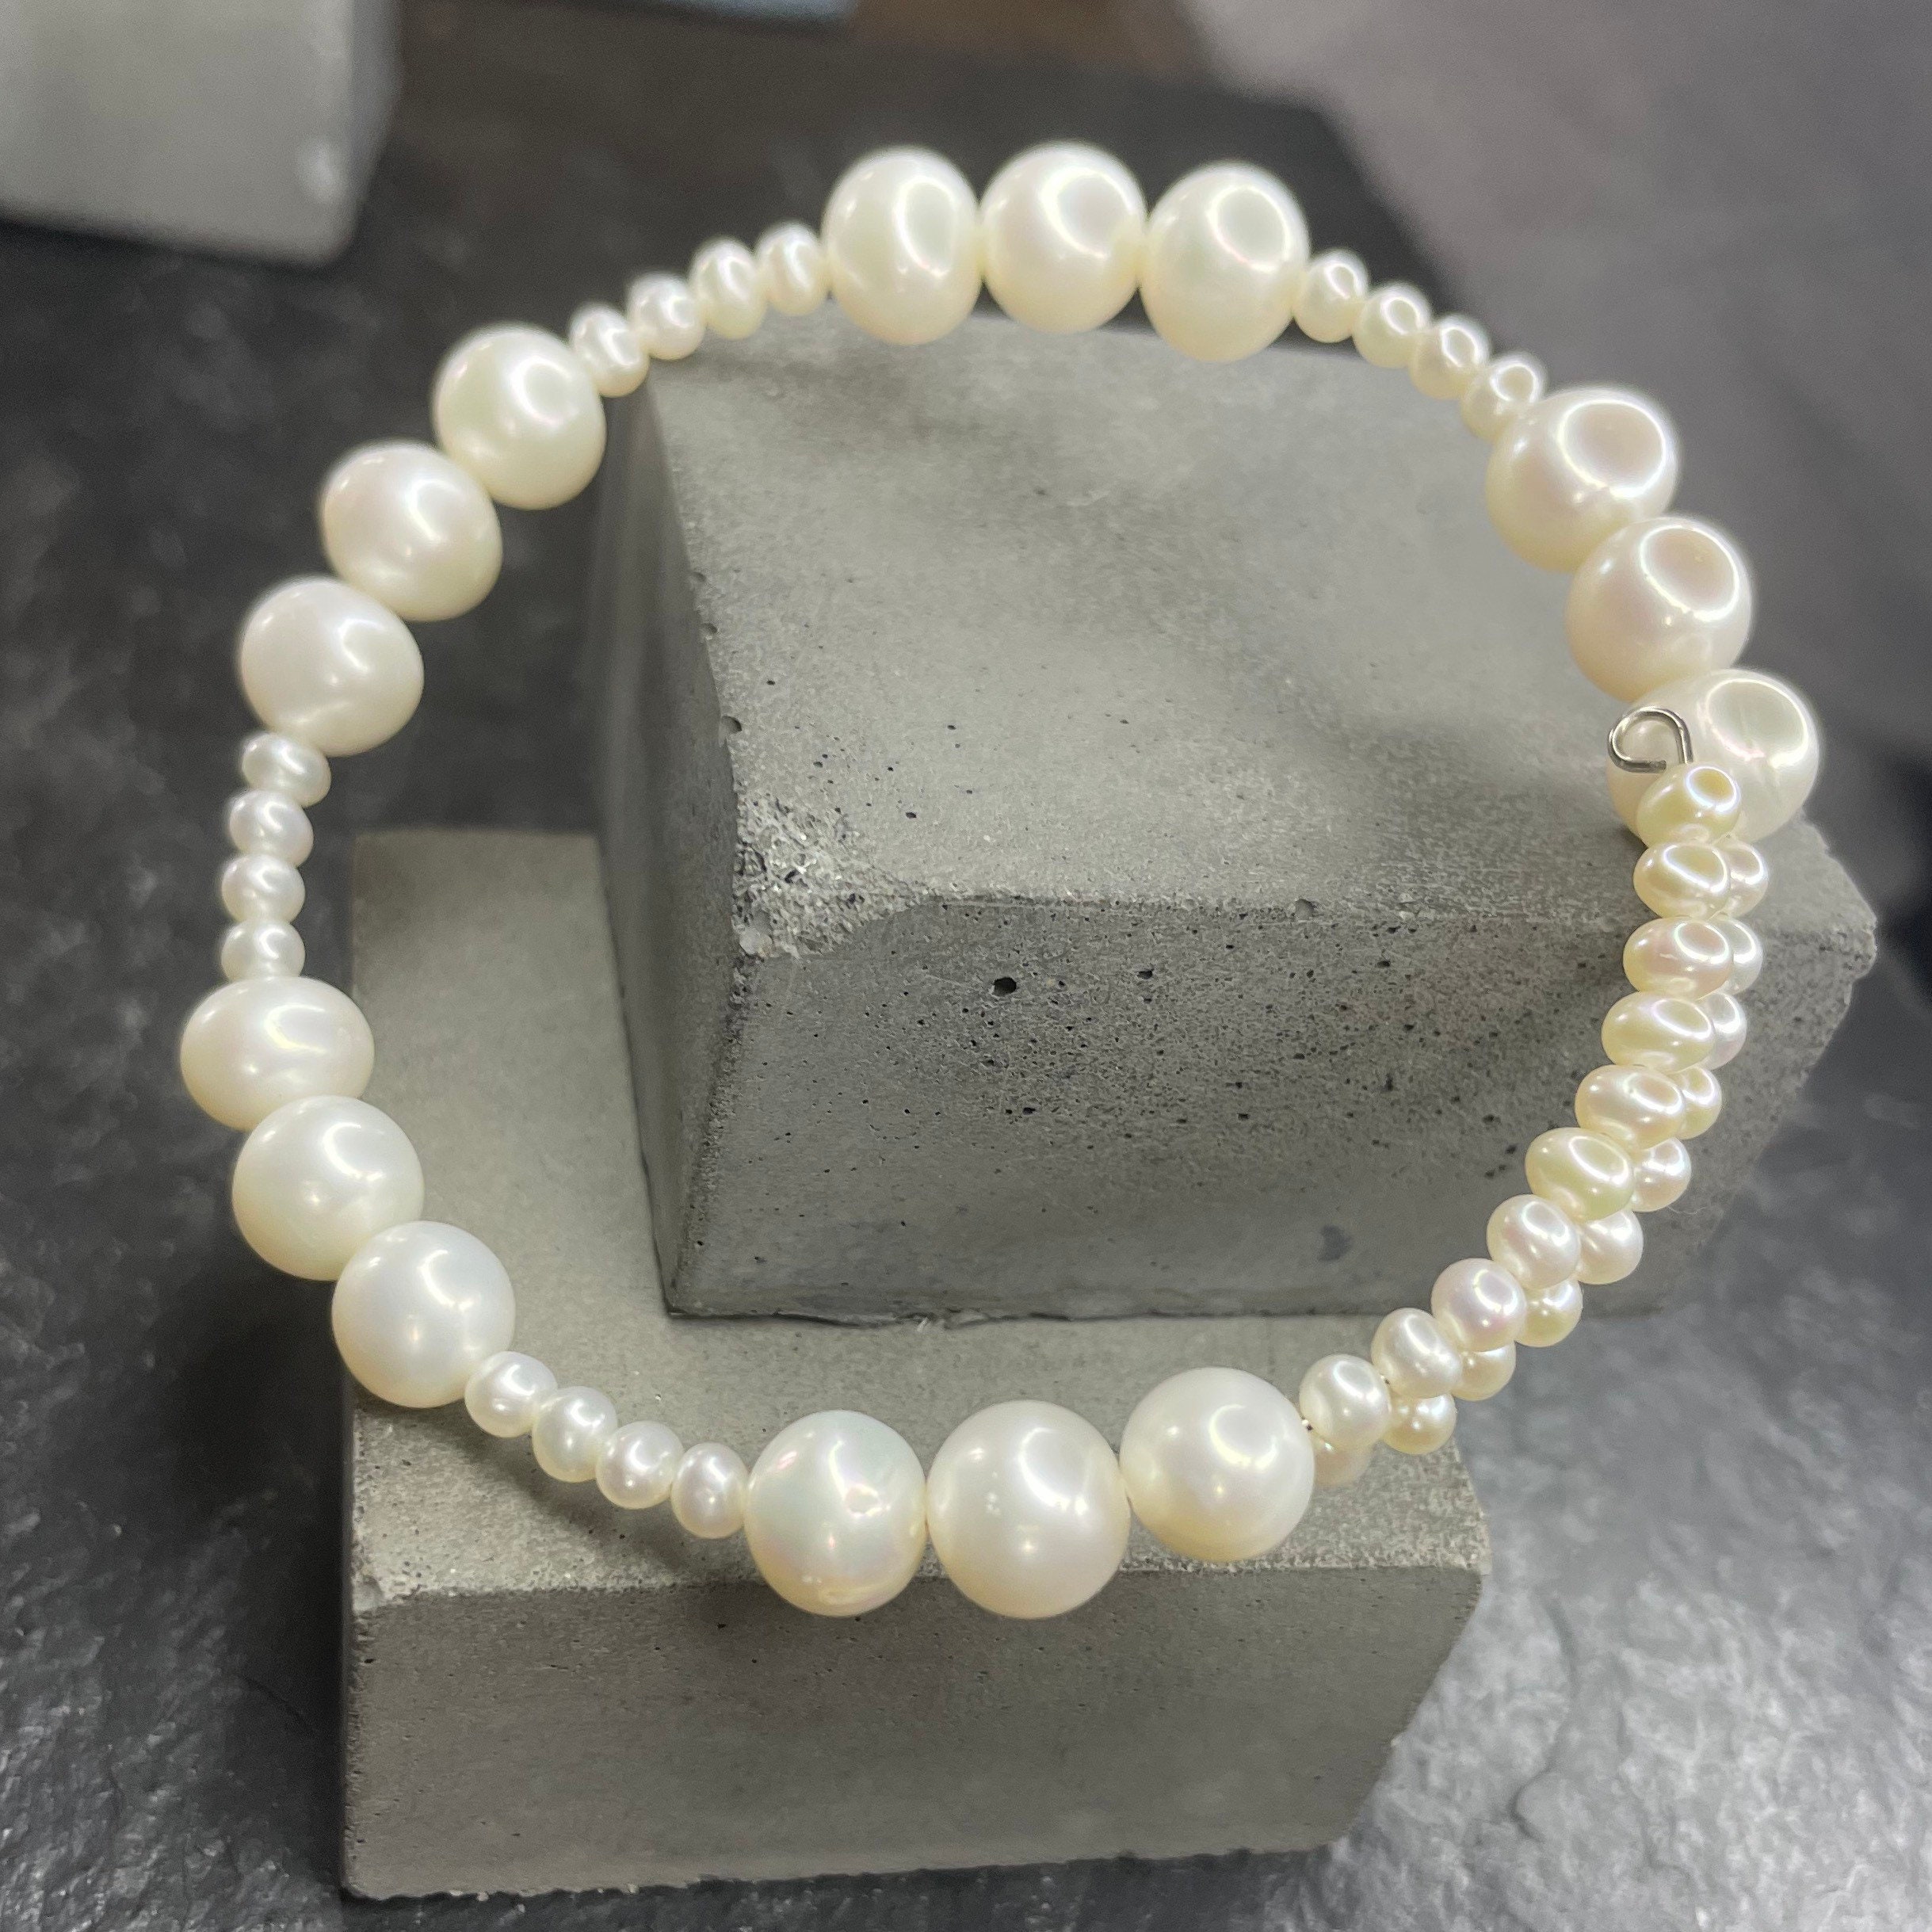 Silk + Pearl DIY Memory Wire Bracelet - Happy Hour Projects